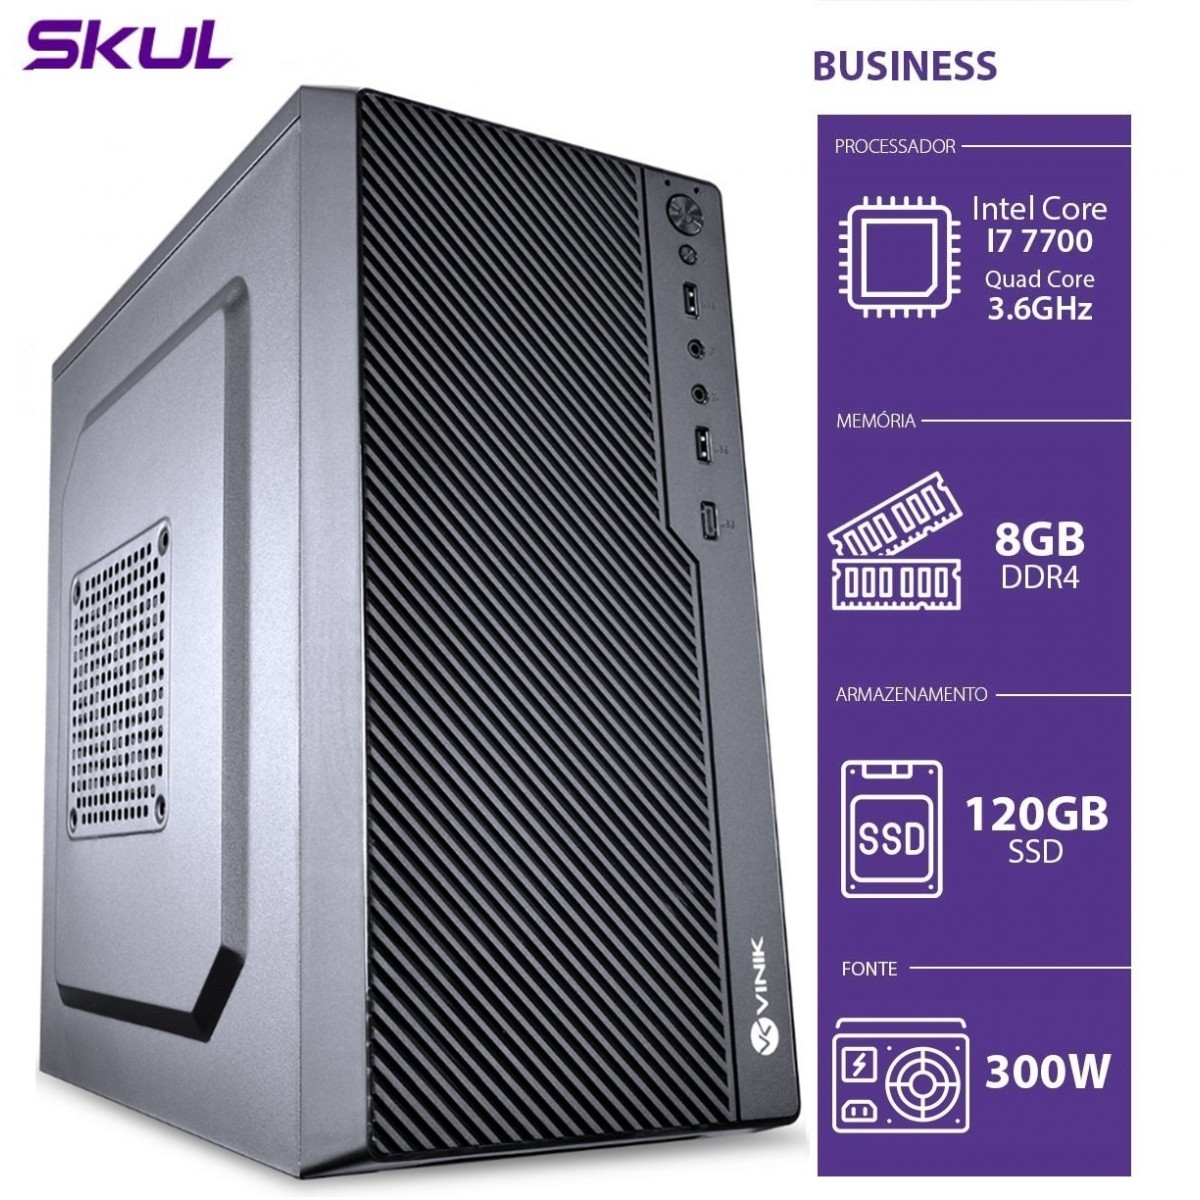 Computador Skul T-Home Business B700 i7 7700 / 8GB DDR4 / SSD 120GB  / HDMI/VGA / FONTE 300W